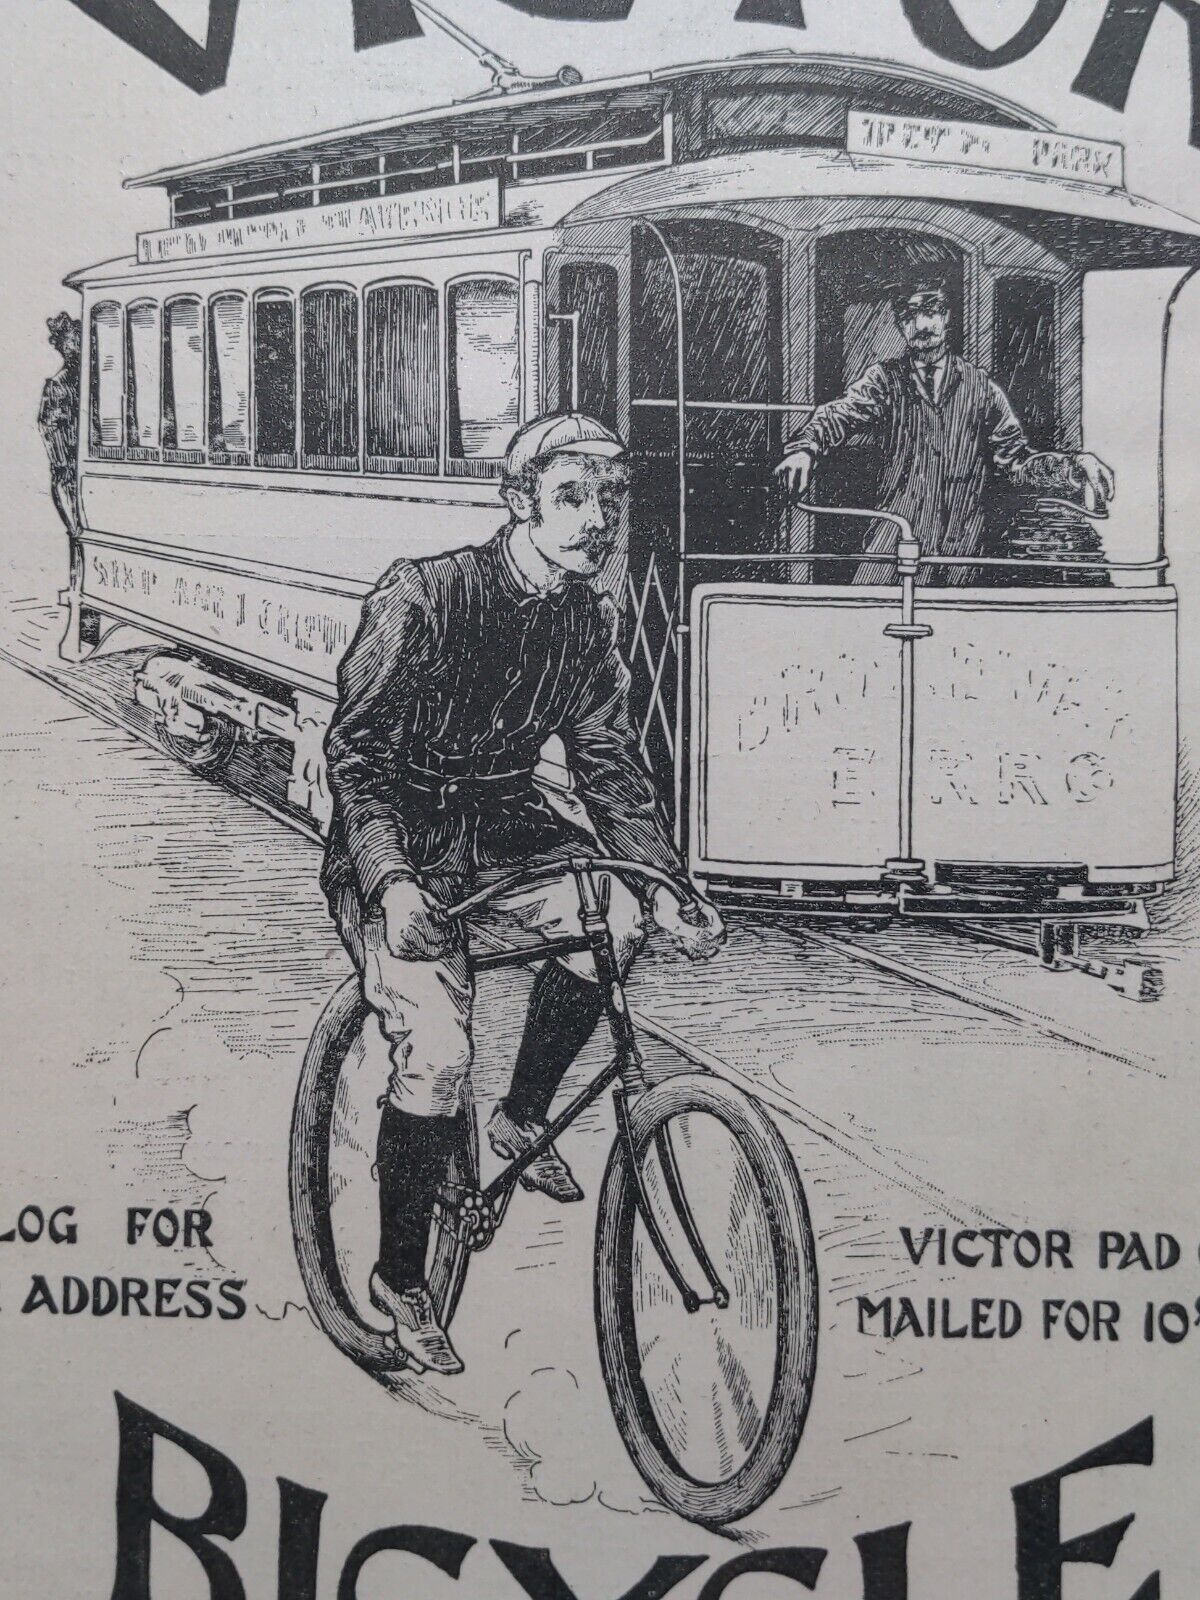 Victor Bicycle Trolley Boston Detroit San Fran Victorian Print Ad 1895 1890s D1